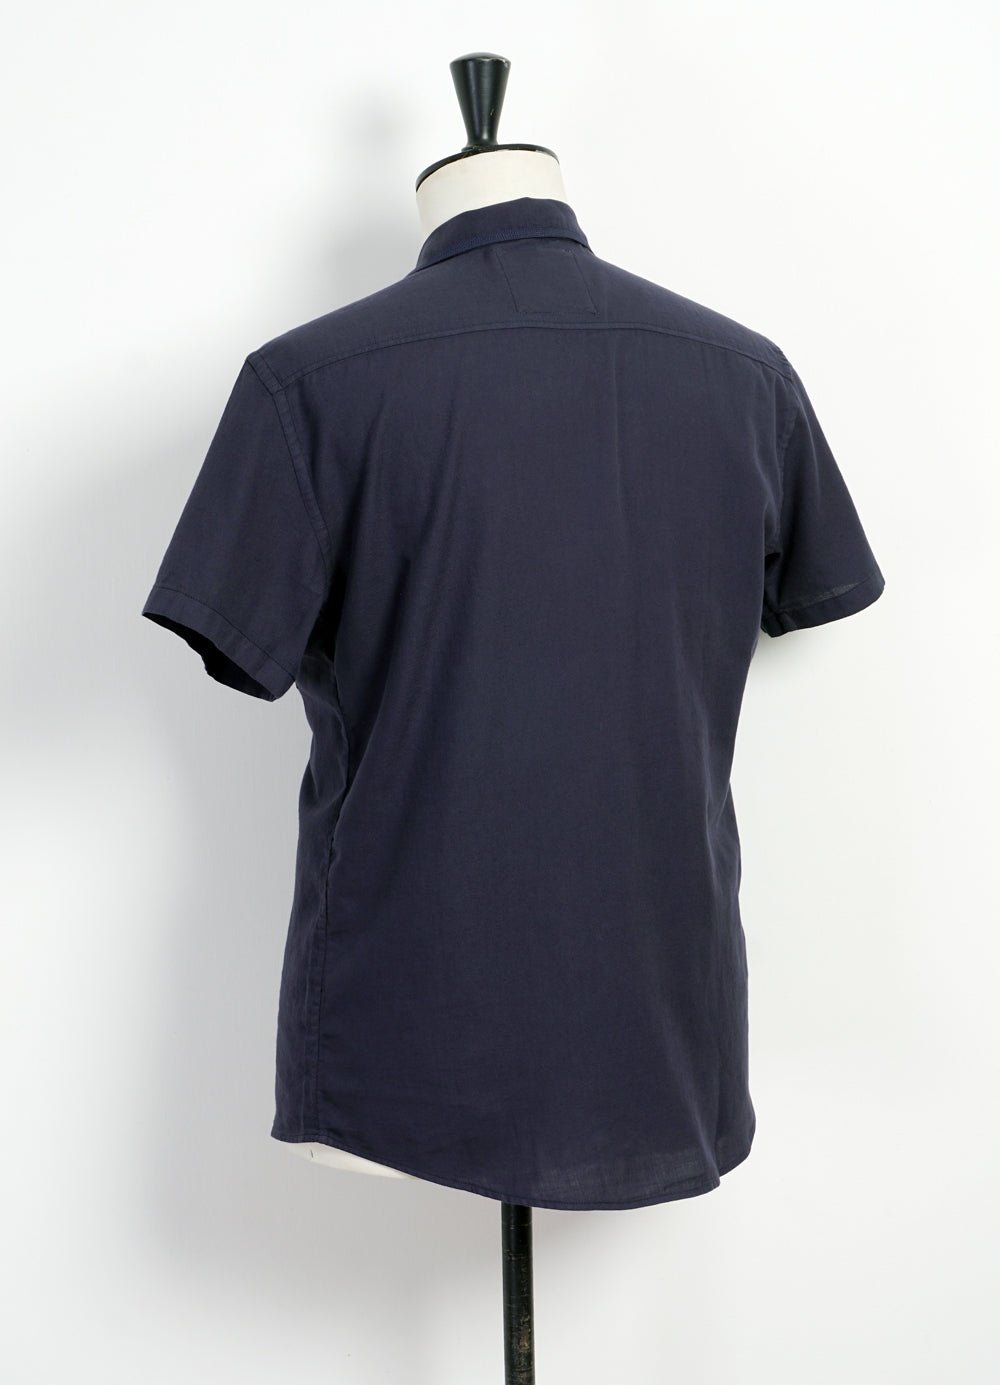 HANSEN GARMENTS - JONNY | Short Sleeve Shirt | Navy - HANSEN Garments